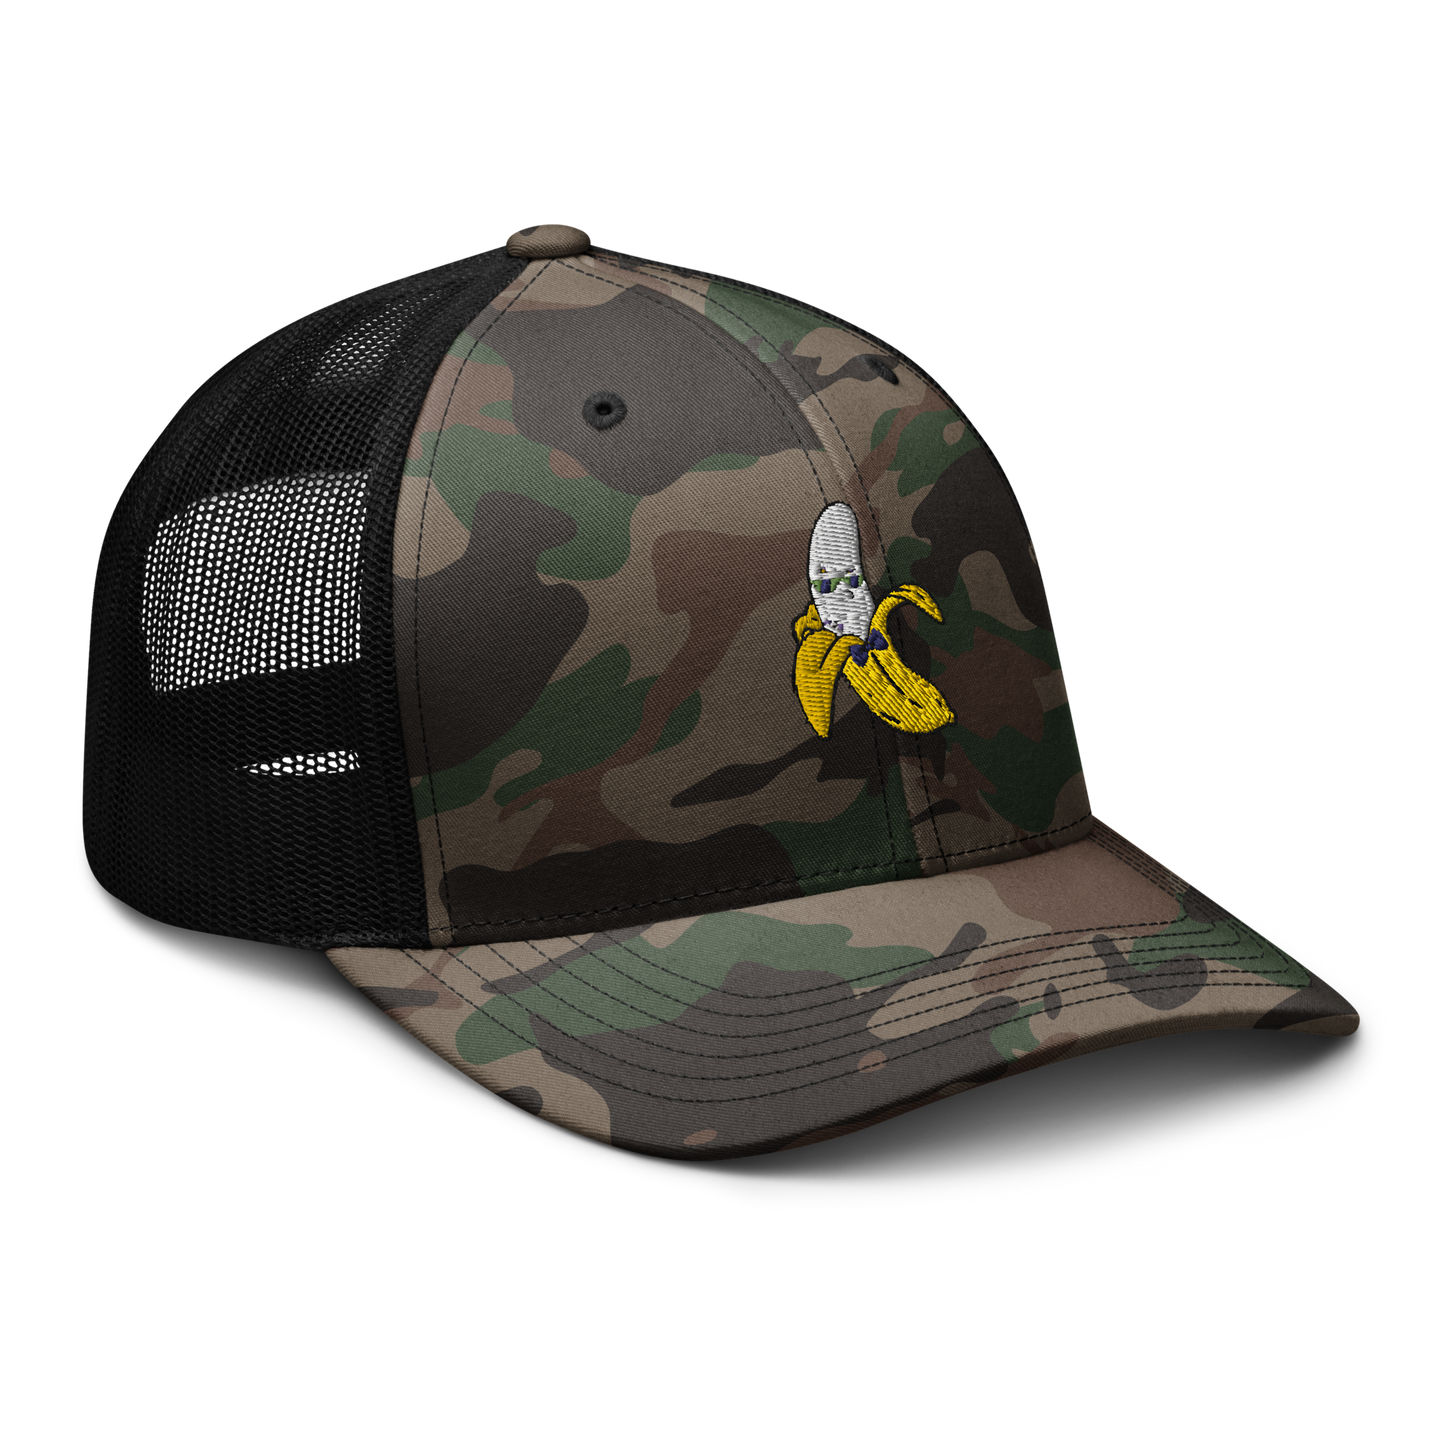 Banana Camouflage trucker hat